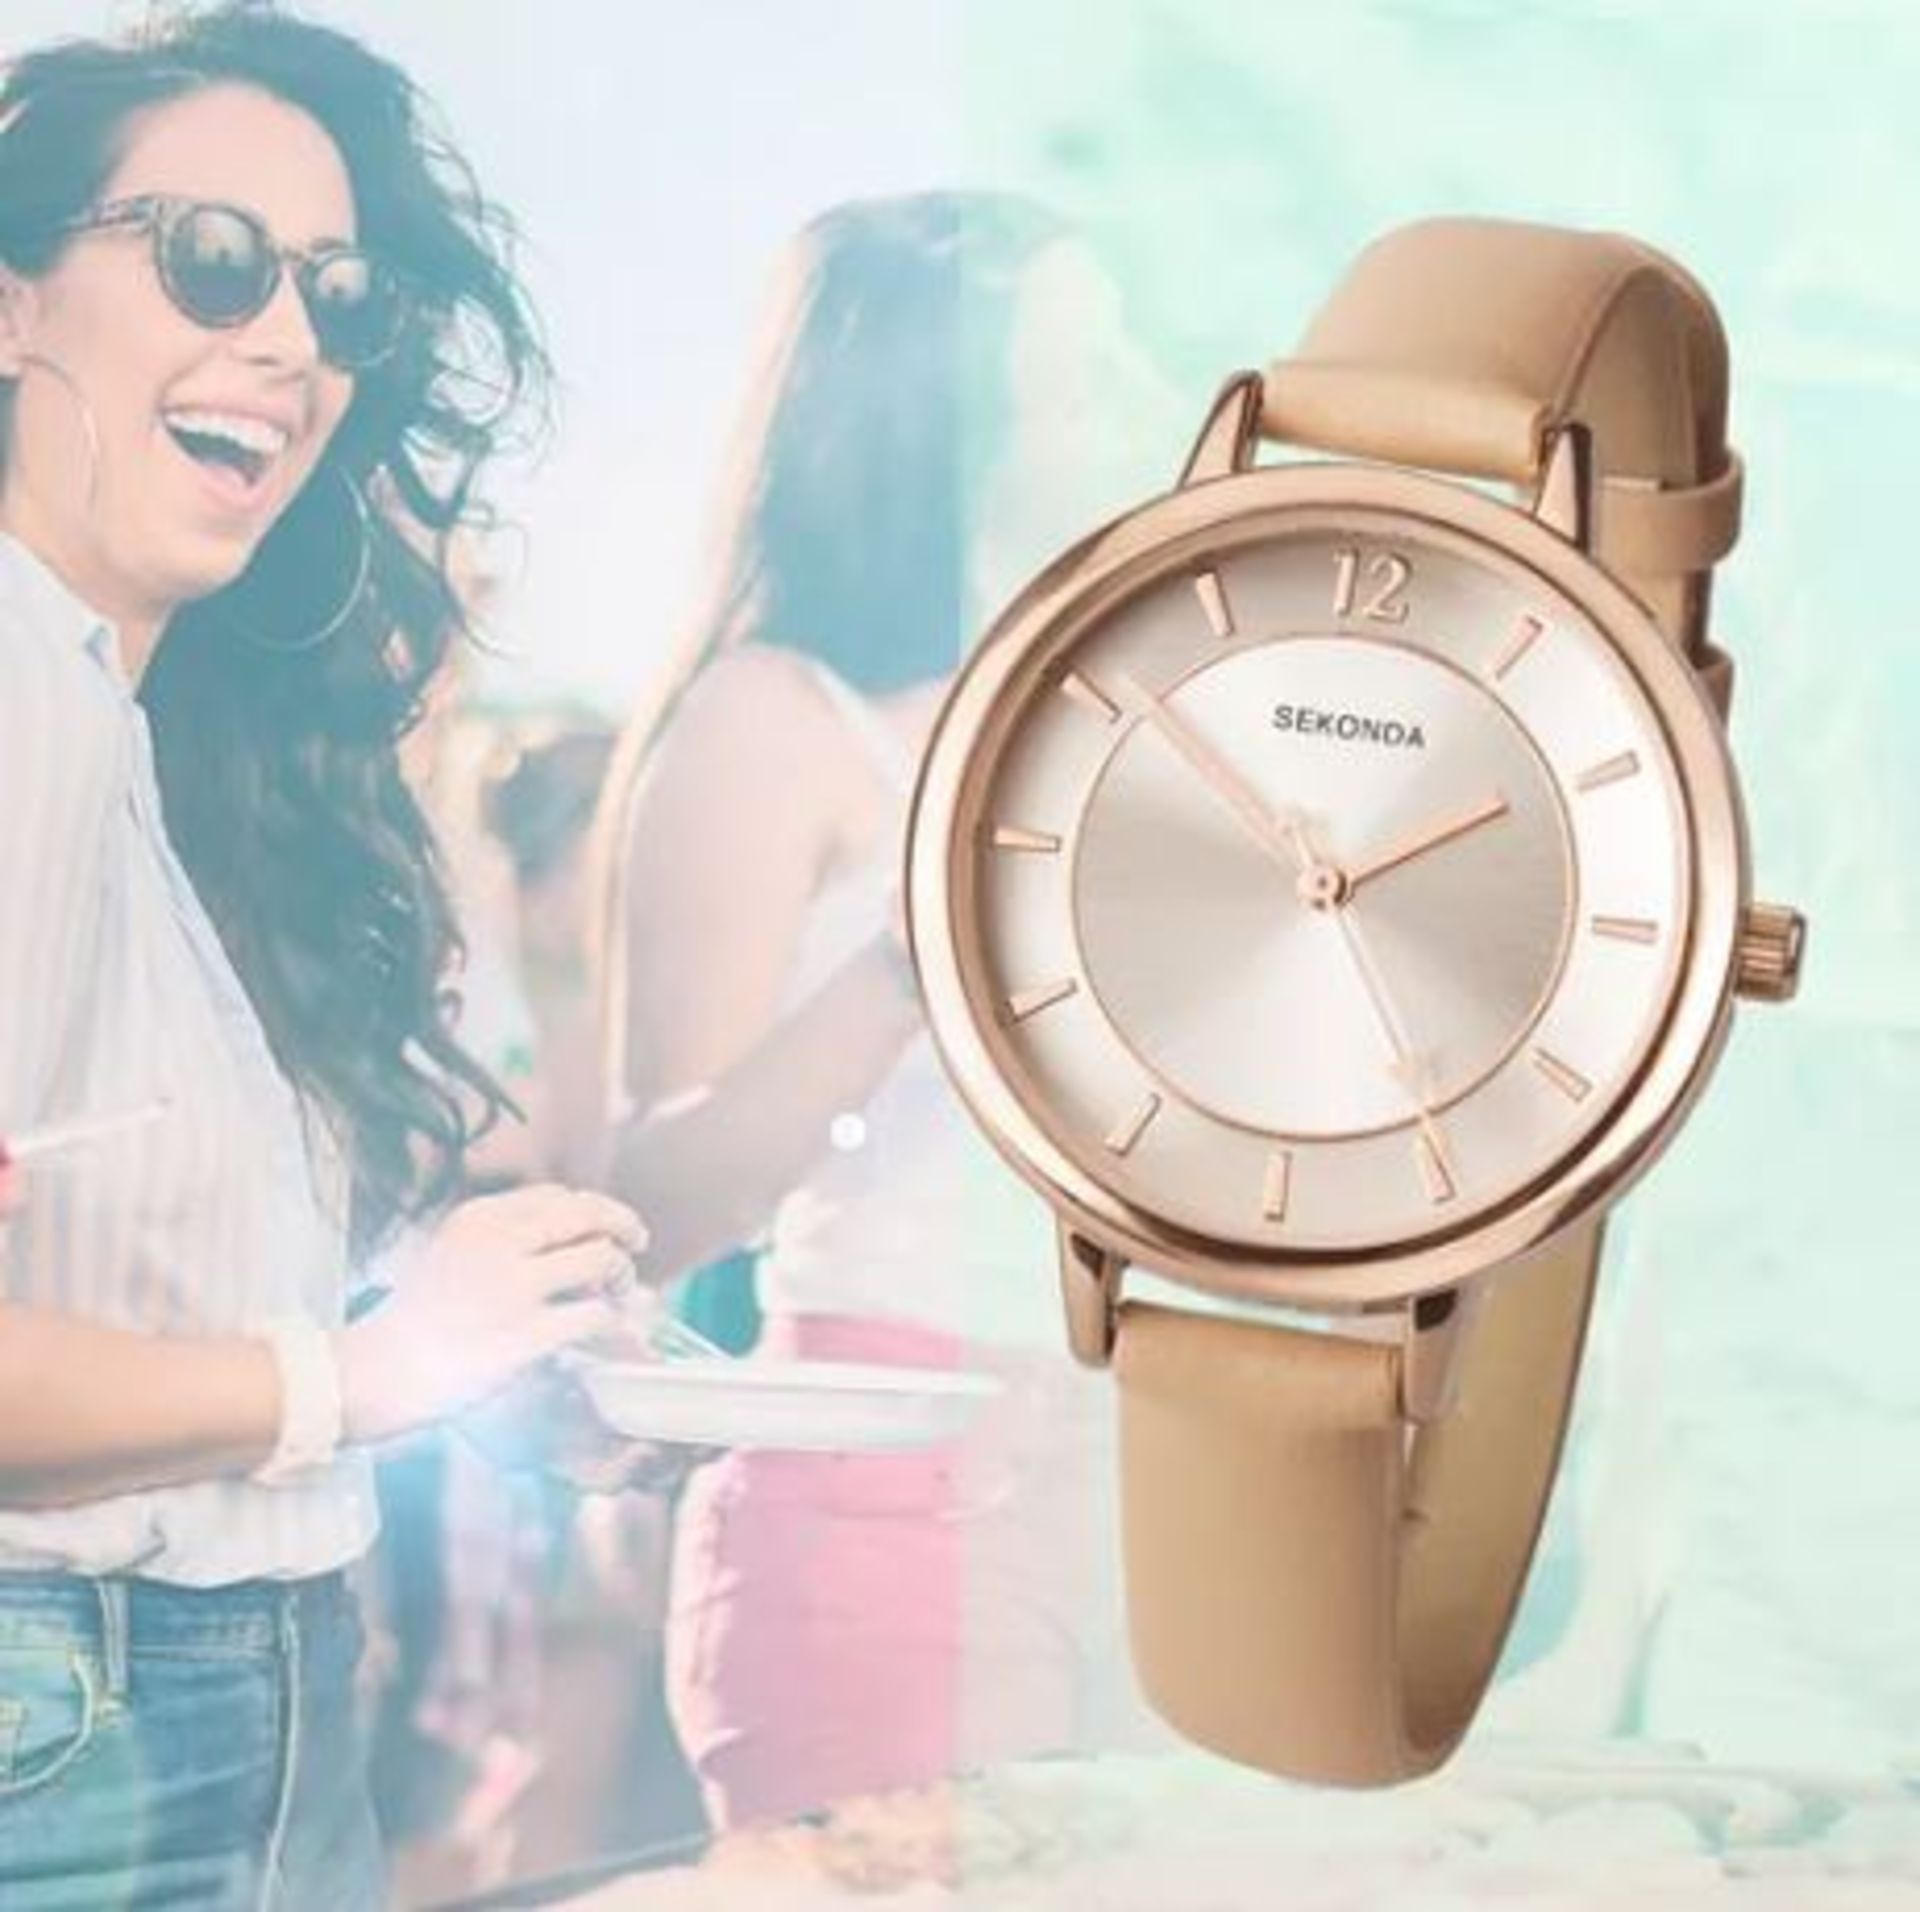 5 x Brand New Sekonda Women's Quartz Watch with Analogue Display 2137.28 - Image 2 of 4